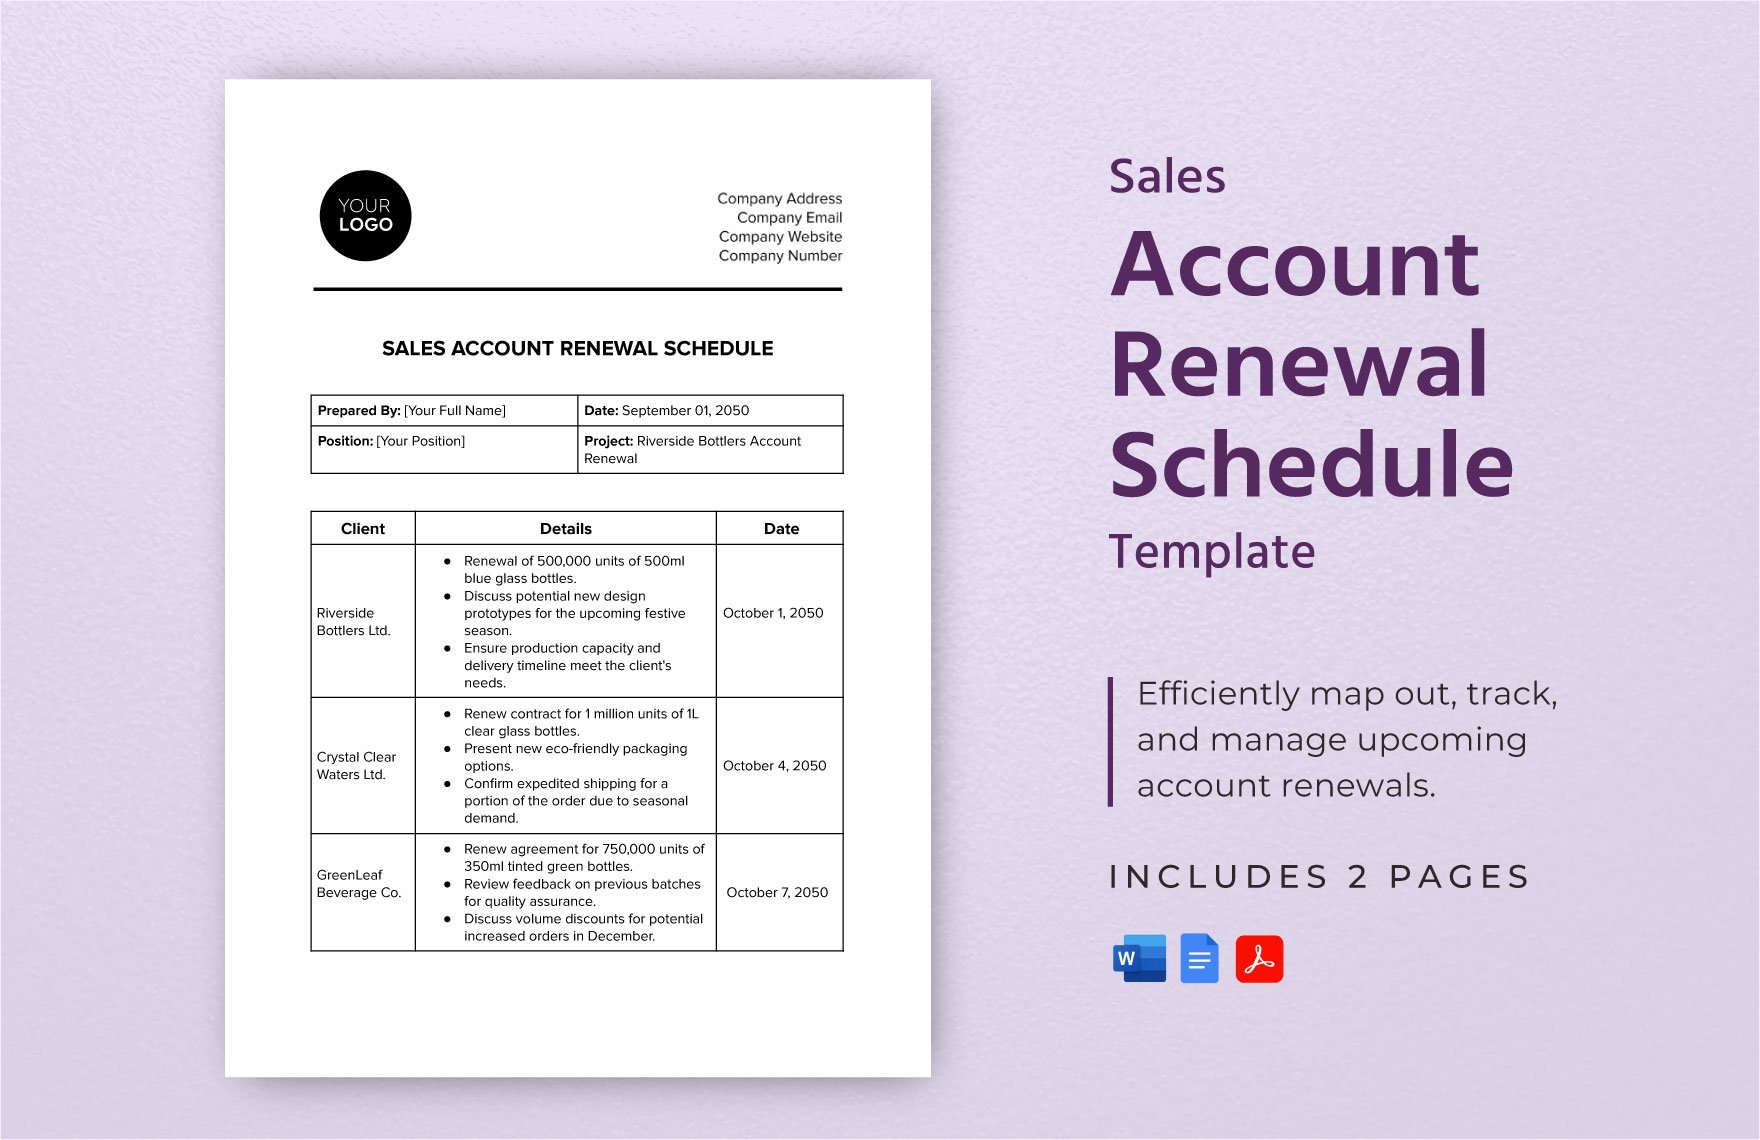 Sales Account Renewal Schedule Template in Word, Google Docs, PDF